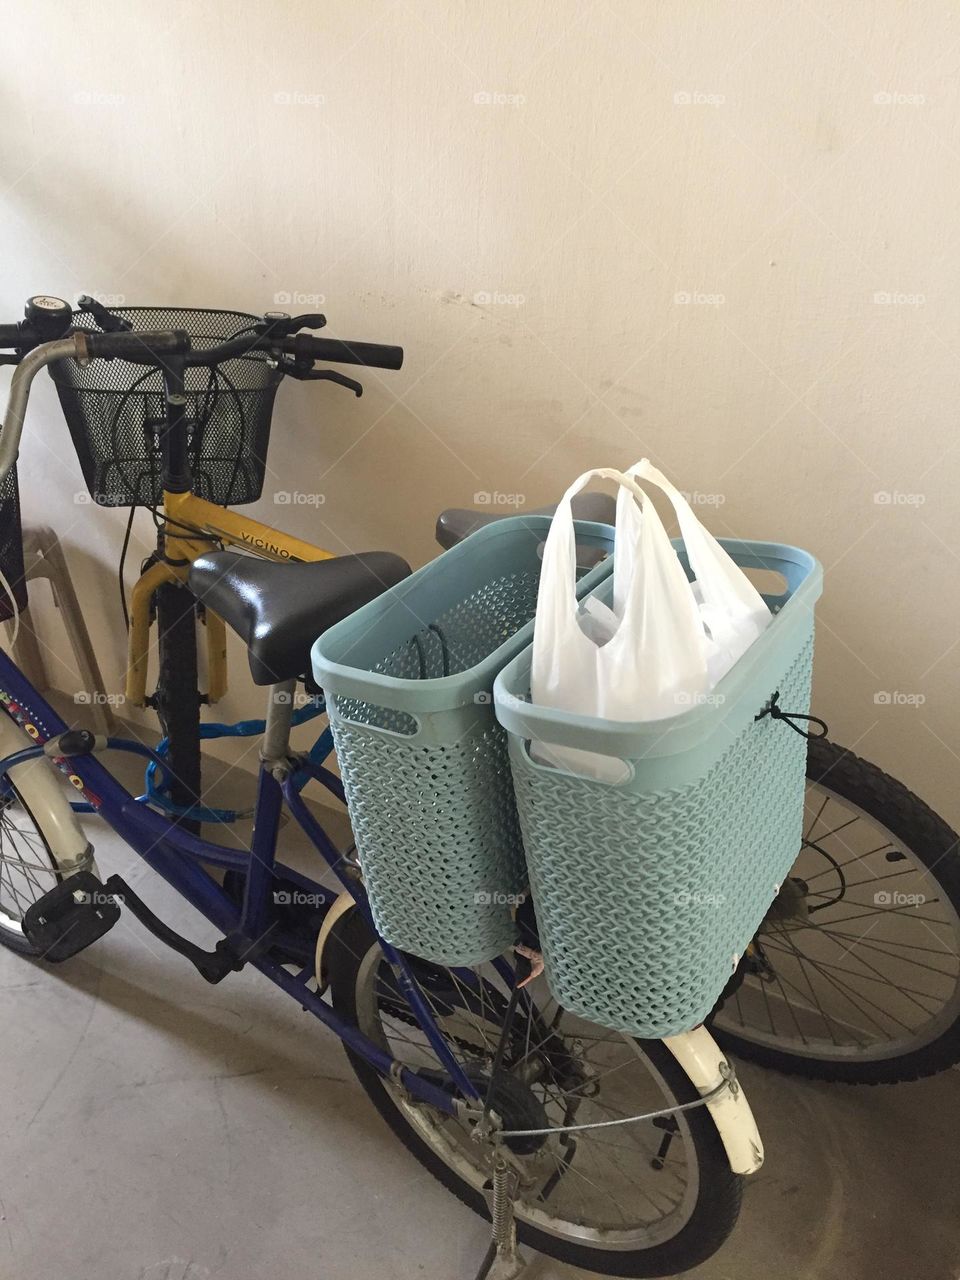 Bike with Twin Plastic Baskets